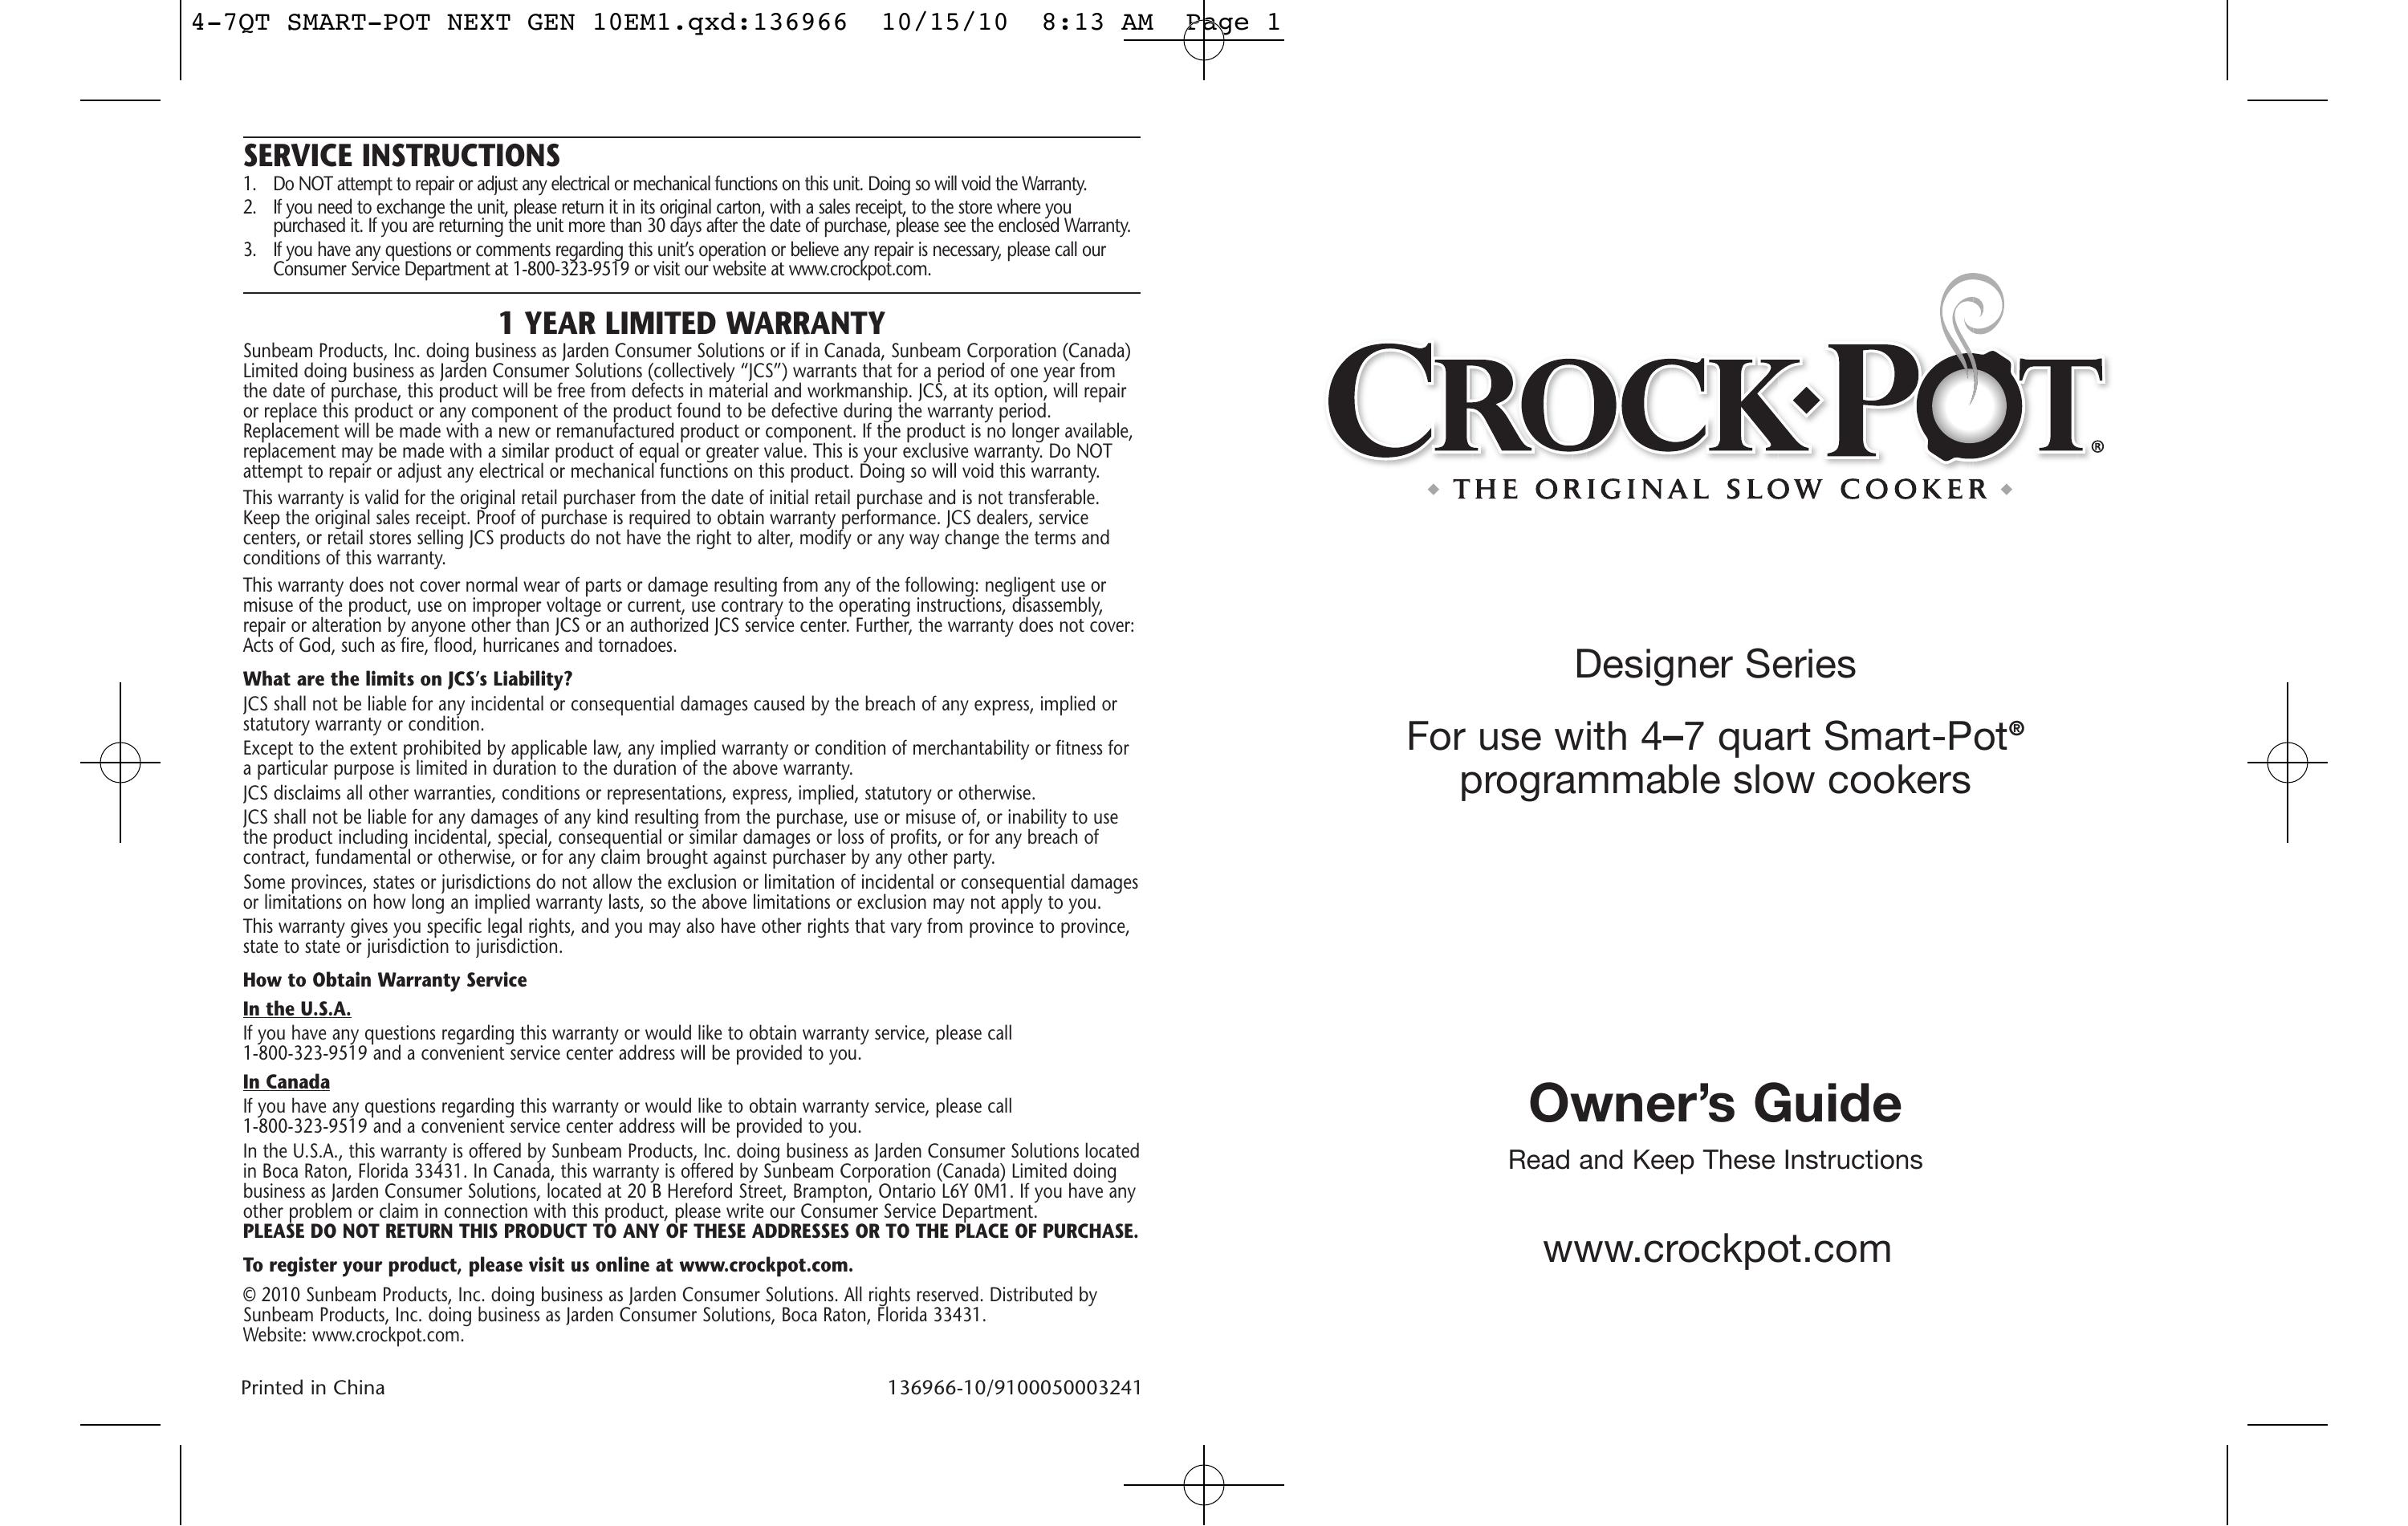 Crock-Pot Designer Series 4-7 Quart Slow Cooker User Manual